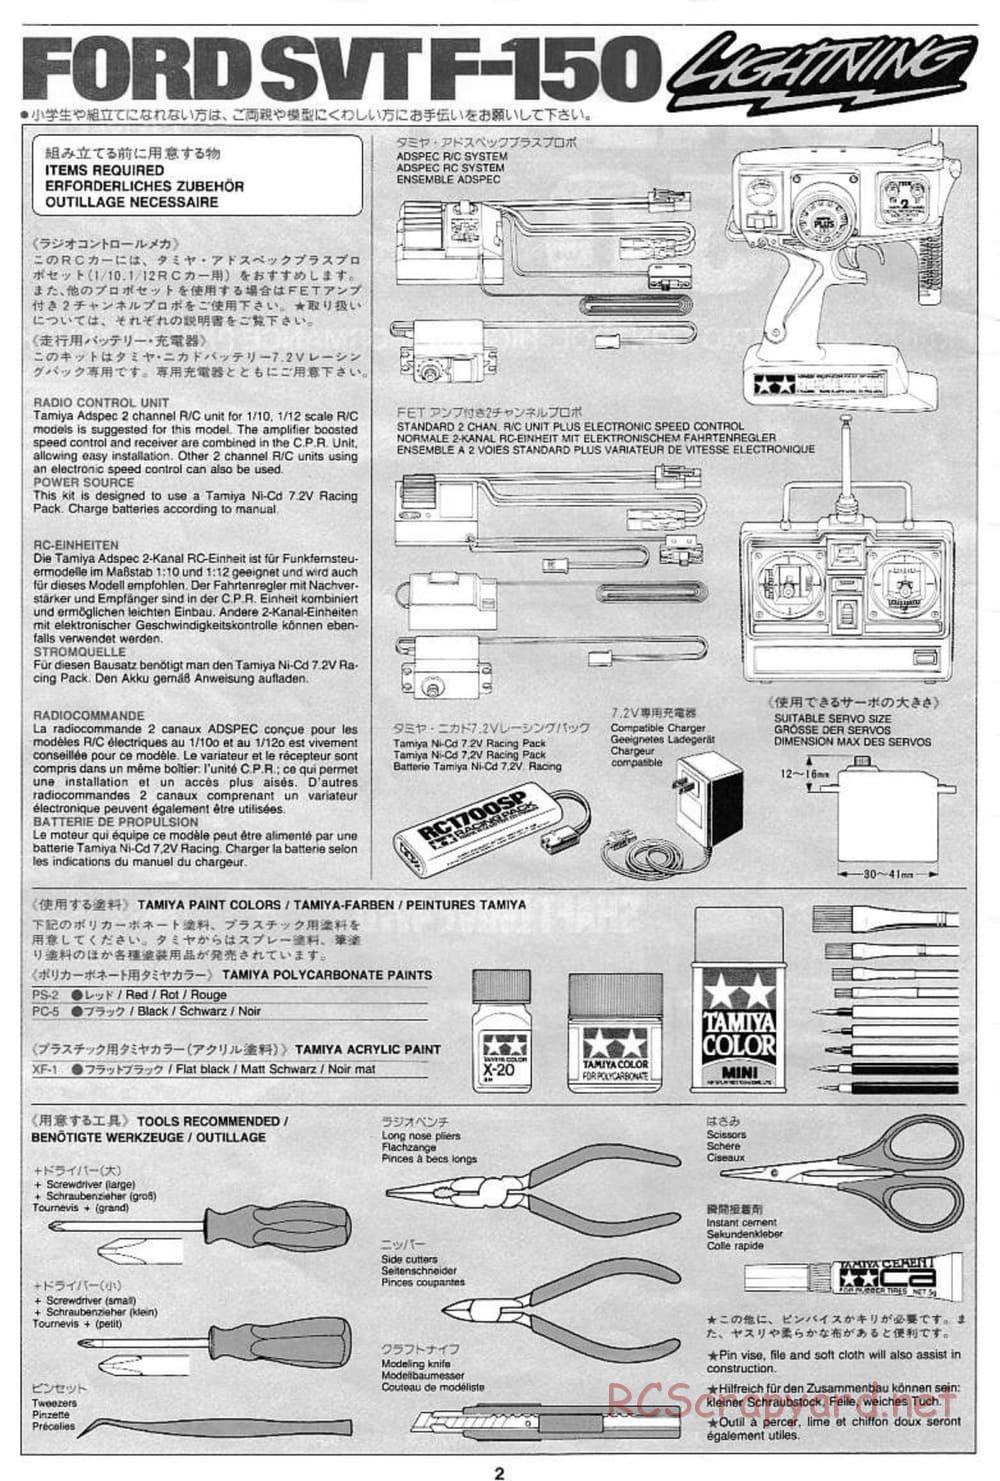 Tamiya - Ford SVT F-150 Lightning - TL-01 Chassis - Manual - Page 2